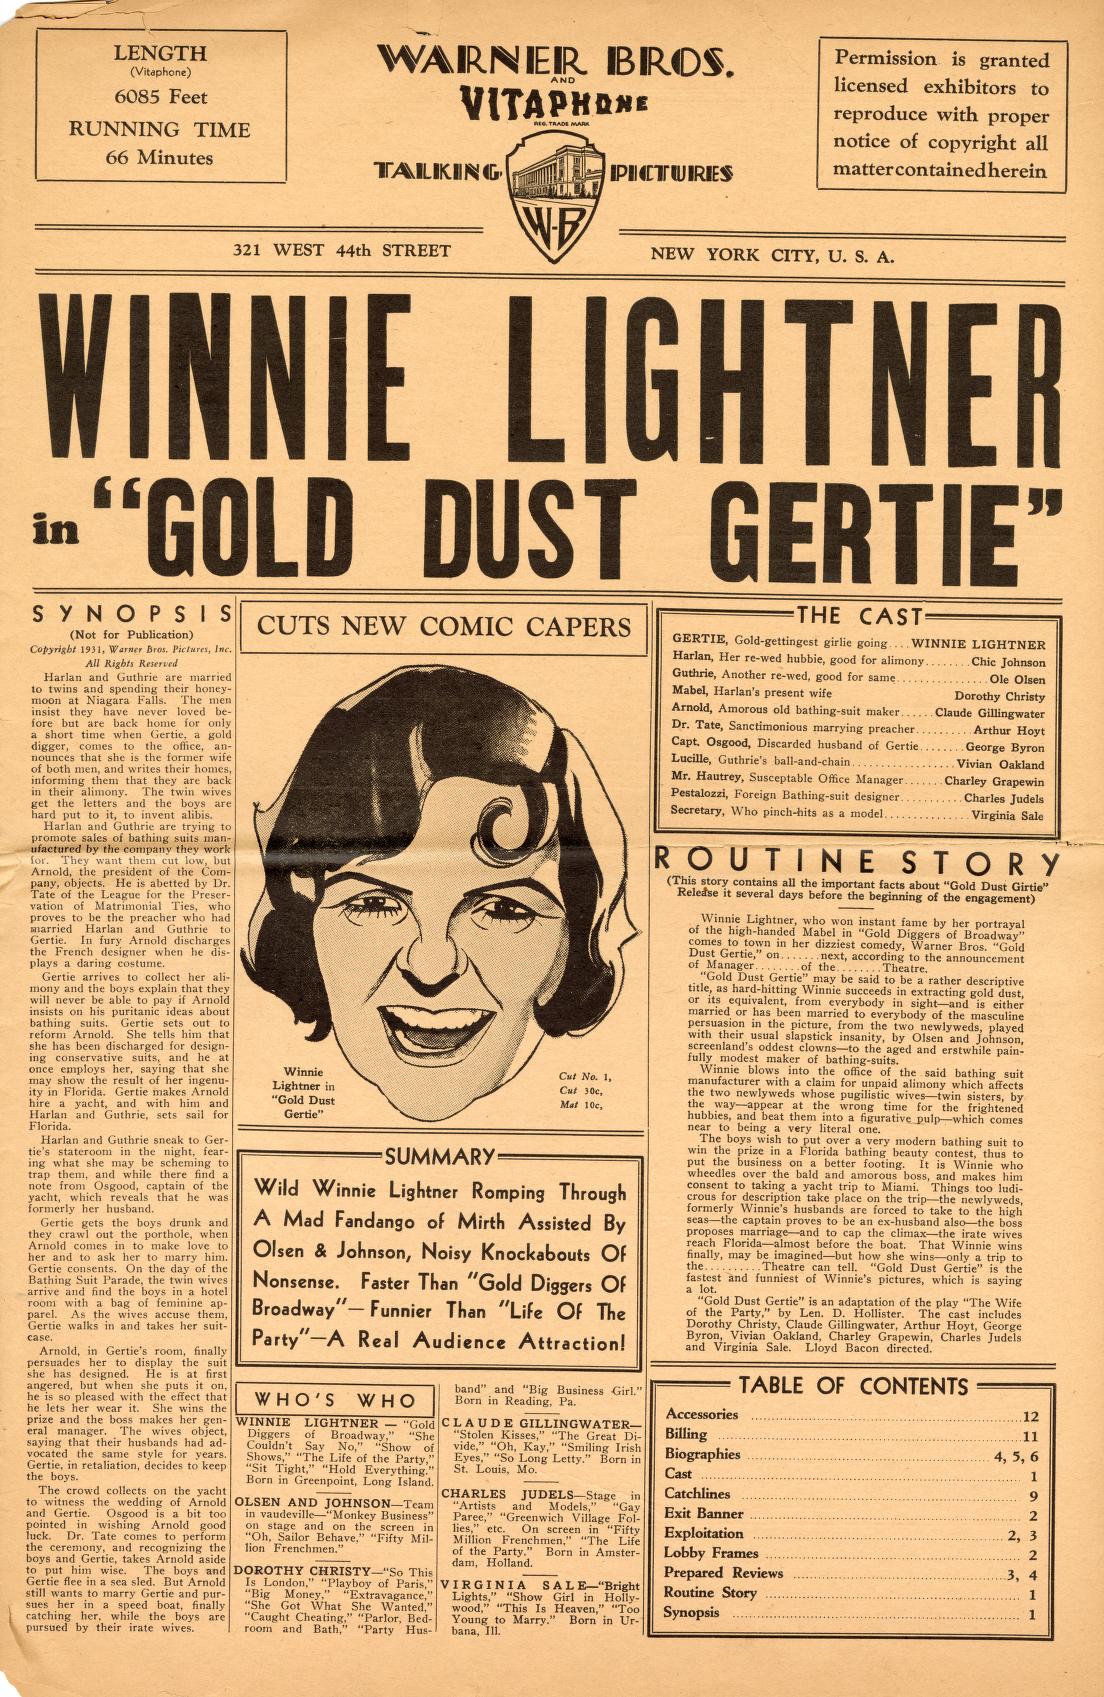 Gold Dust Gertie (Warner Bros.)